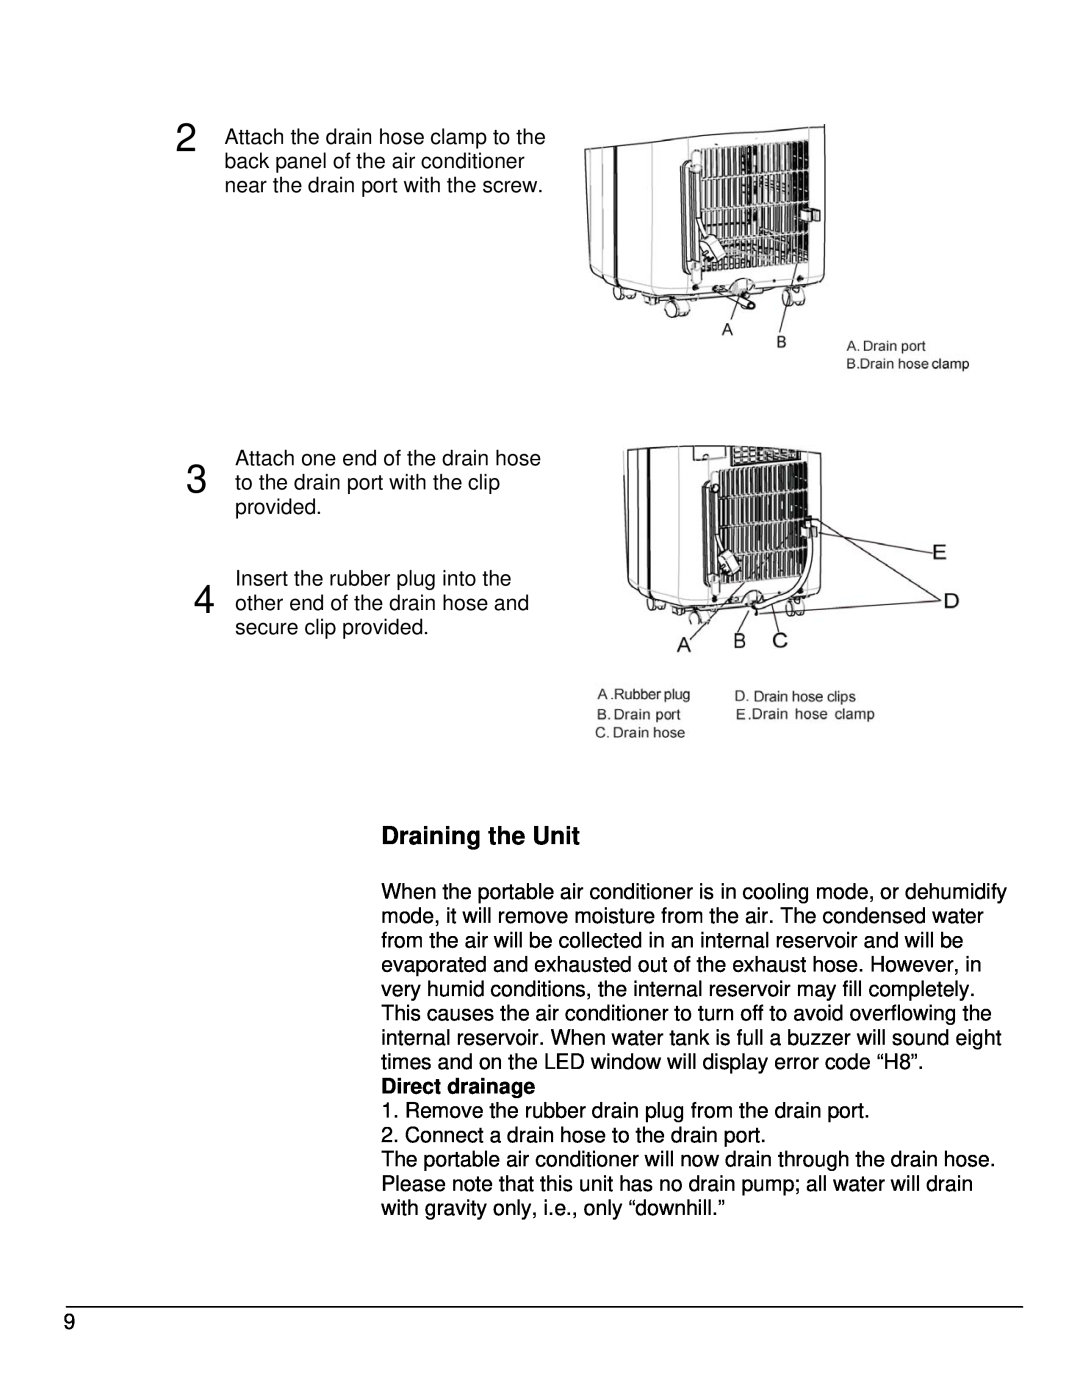 EdgeStar AP10002BL owner manual Draining the Unit, Direct drainage 